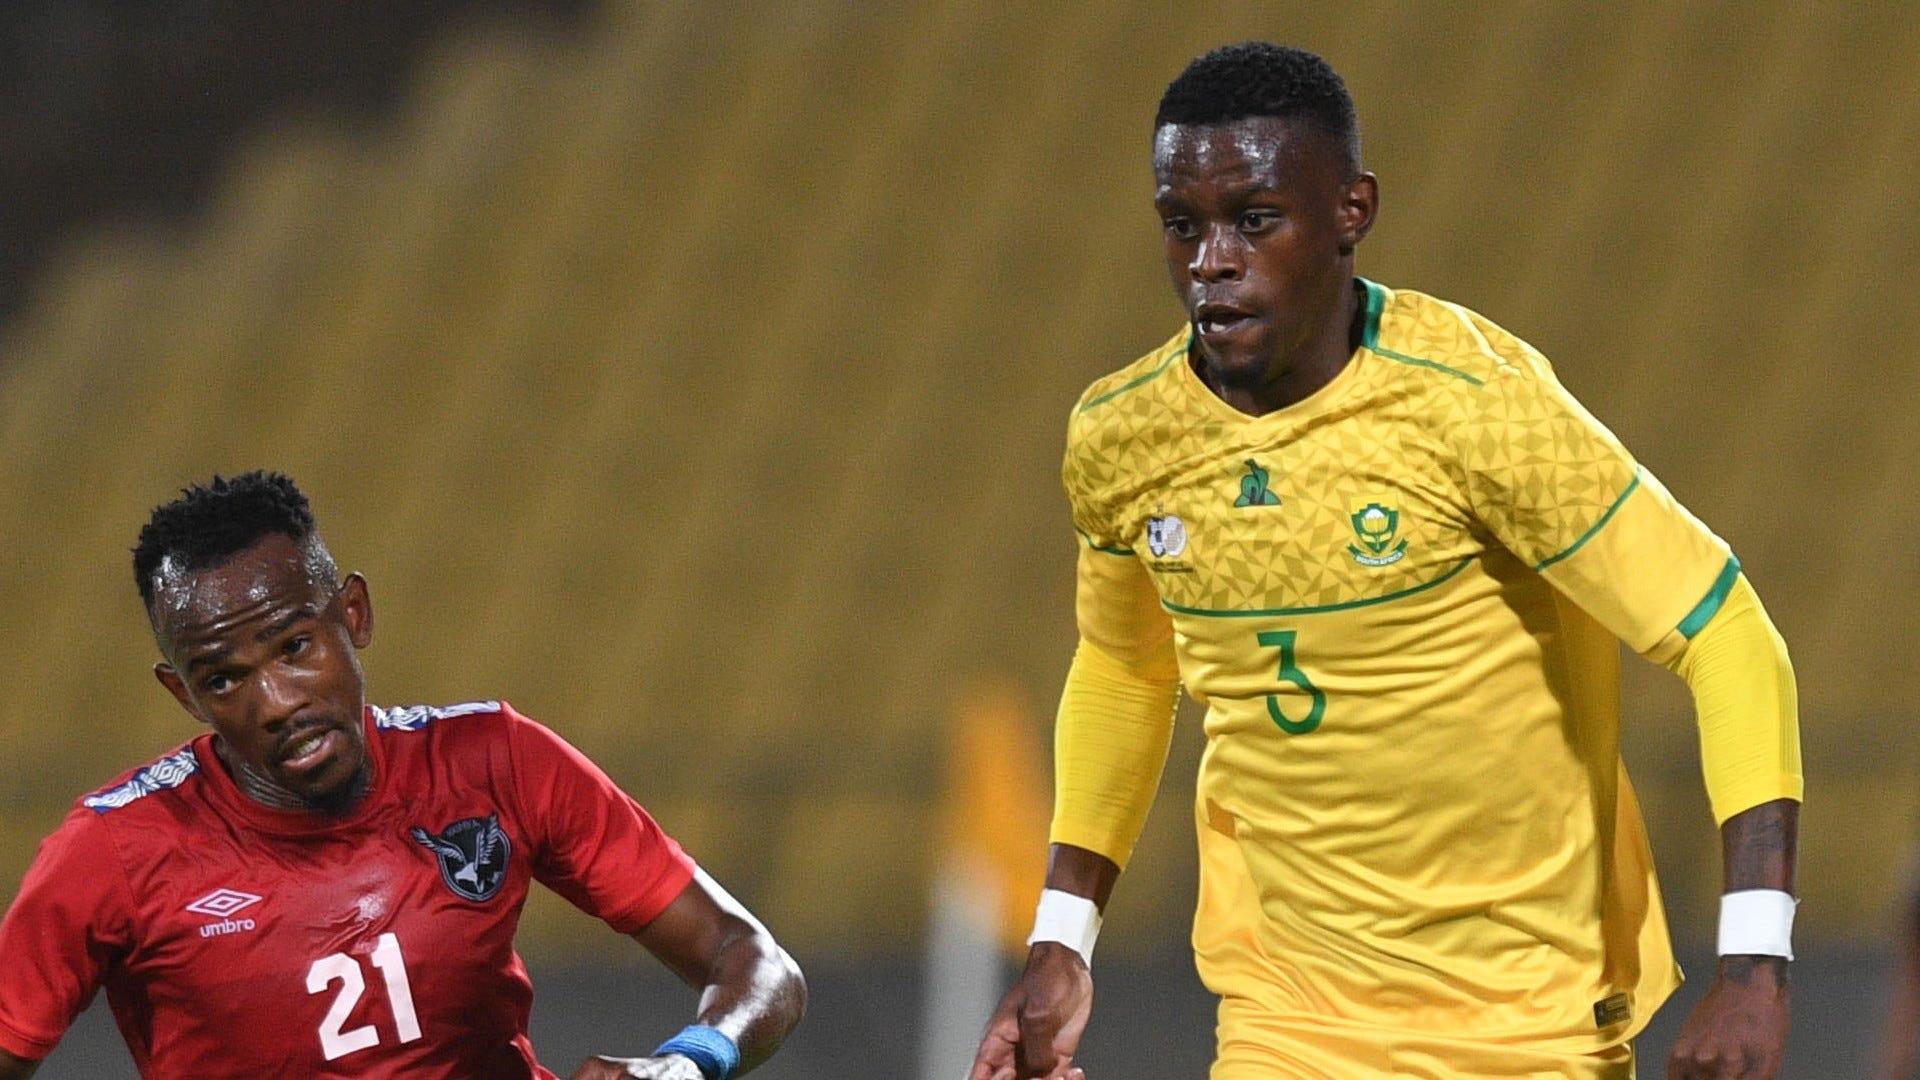 Dynamo Fredericks of Namibia challenges Innocent Maela of Bafana Bafana, October 2020